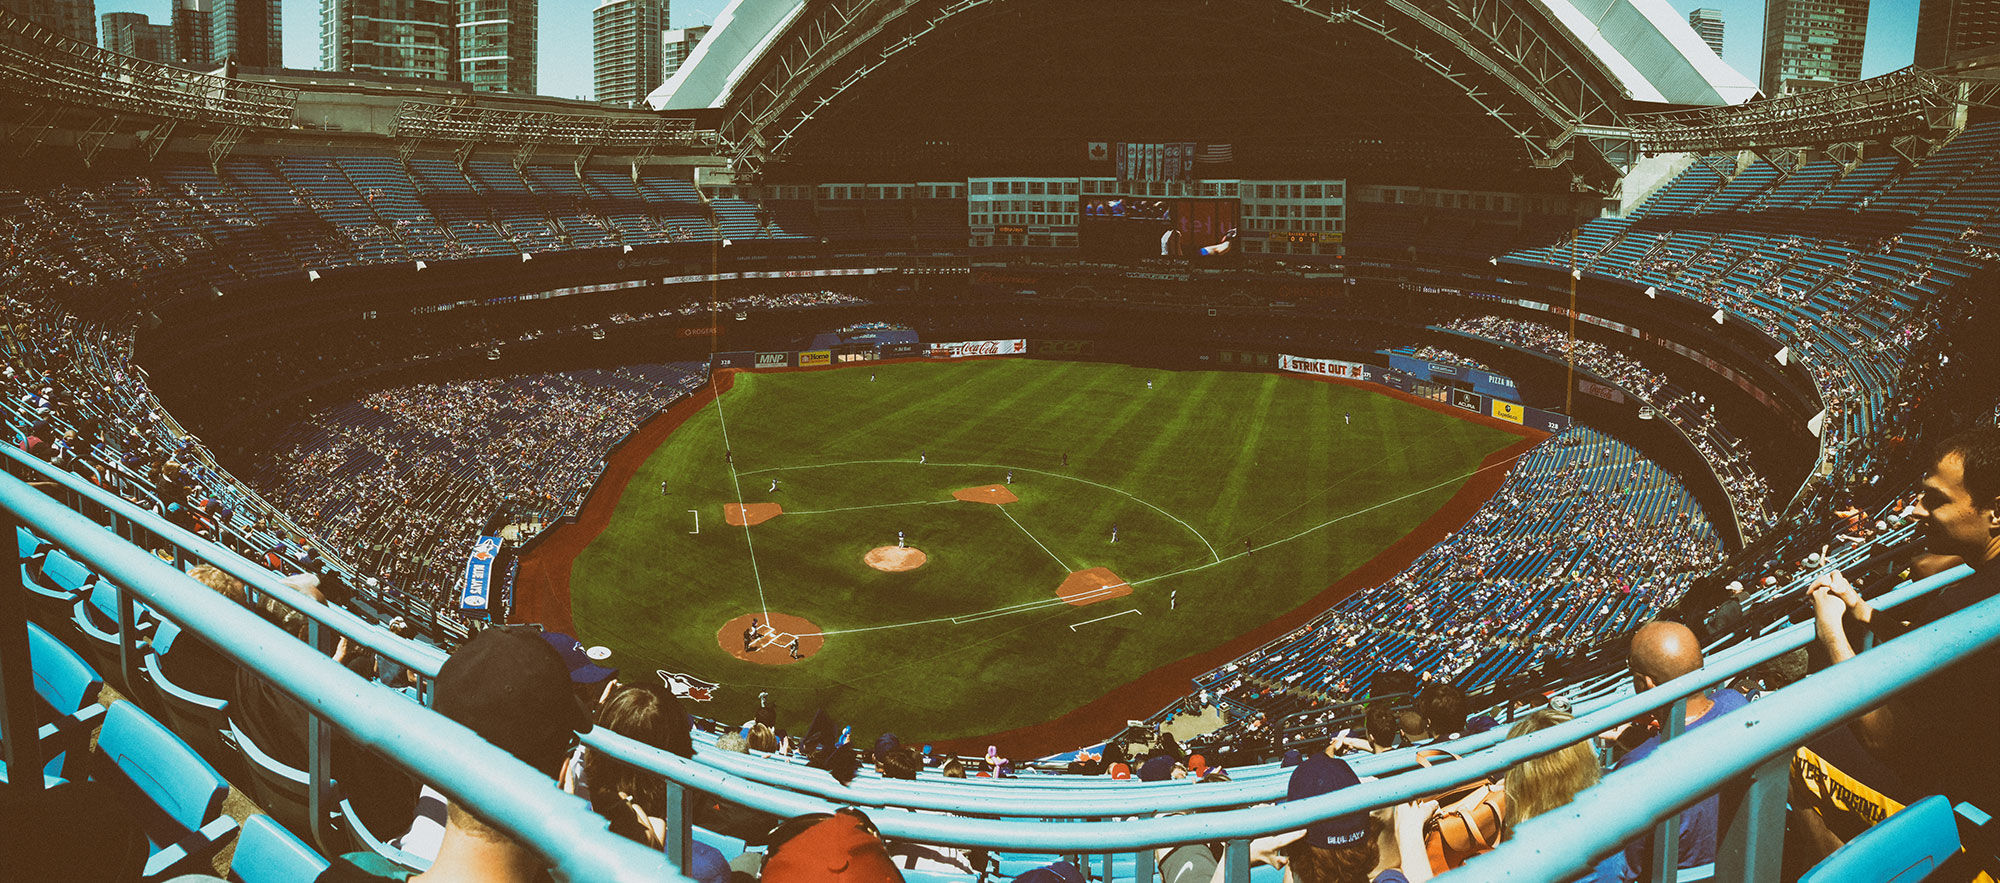 Seattle Mariners 3 – Toronto Blue Jays 2